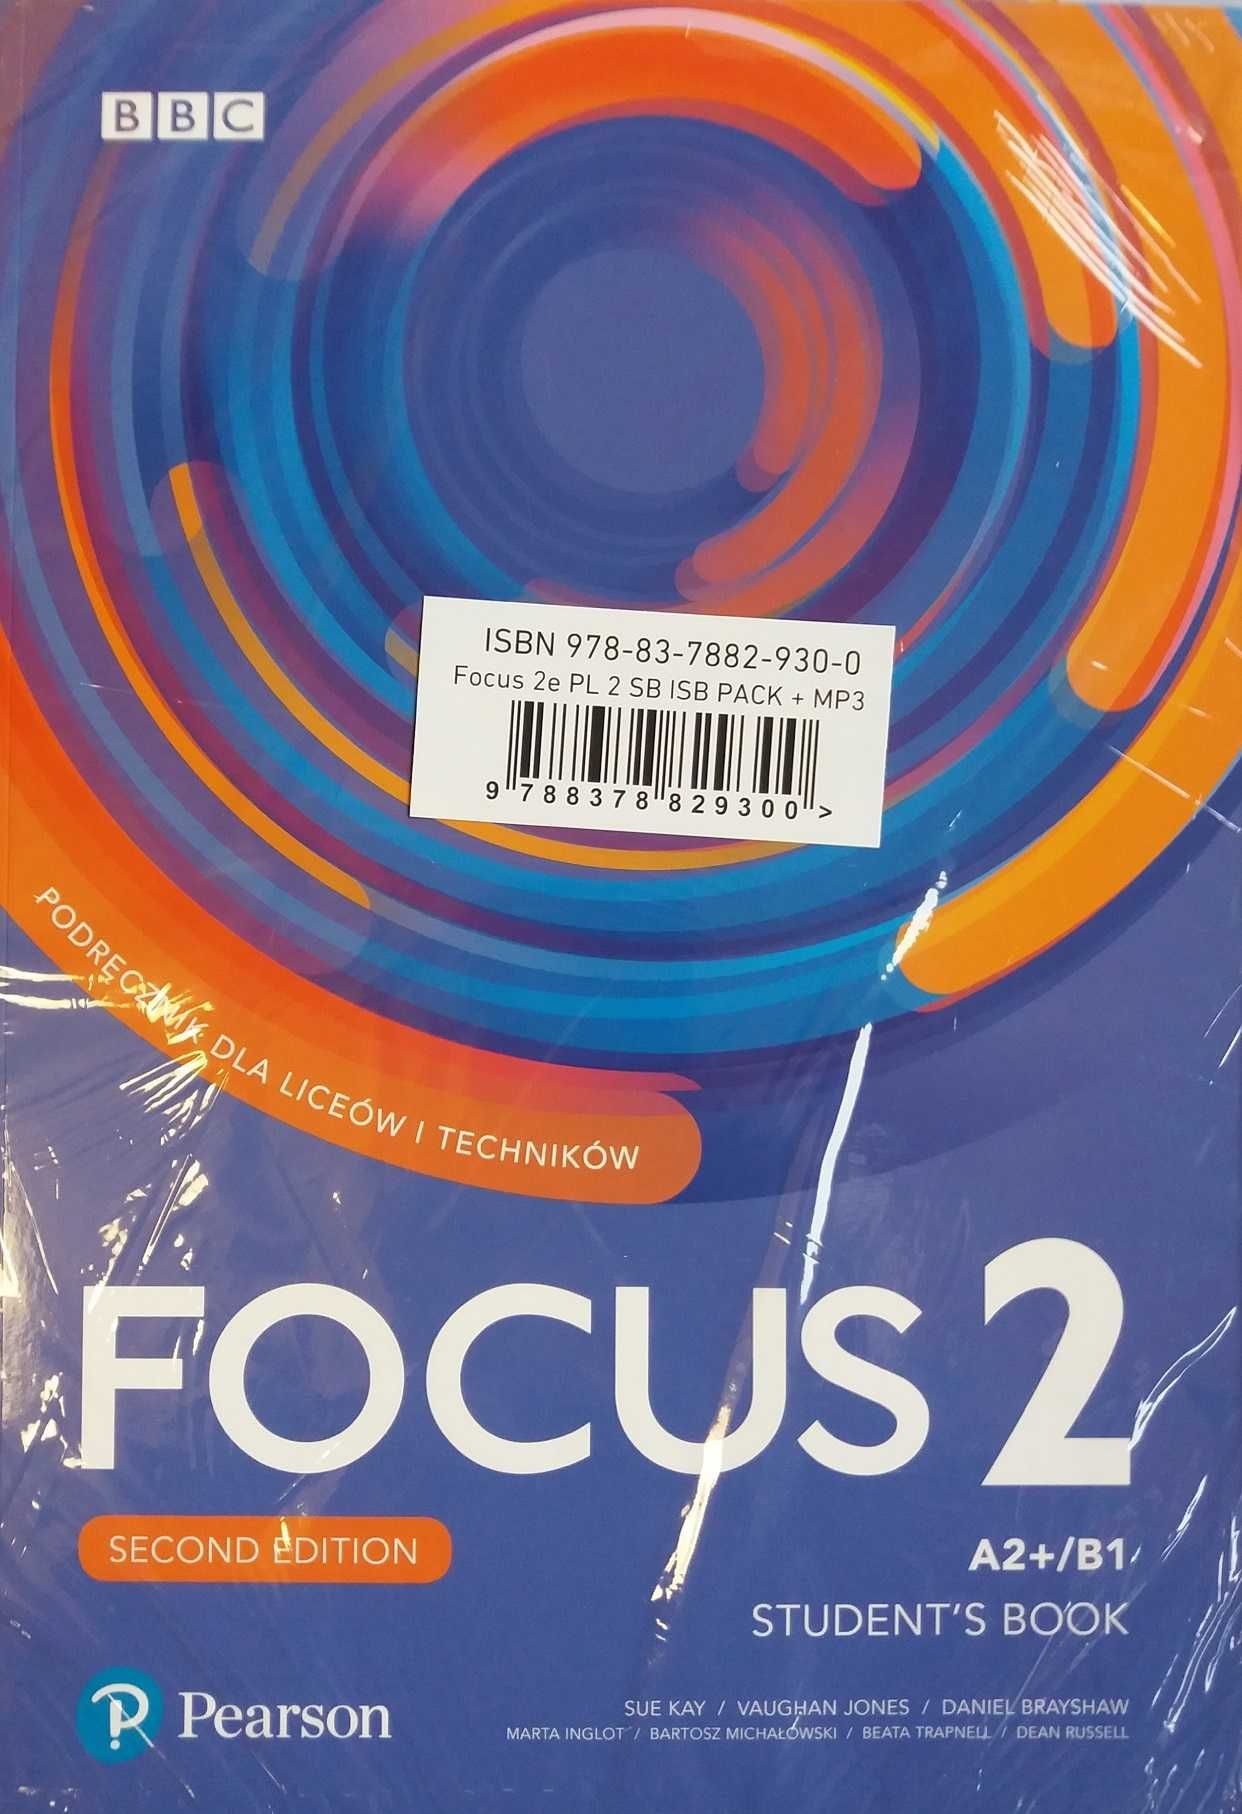 Focus 2 ed.2 SB Digital Resources + interactive + Benchmark. Pearson